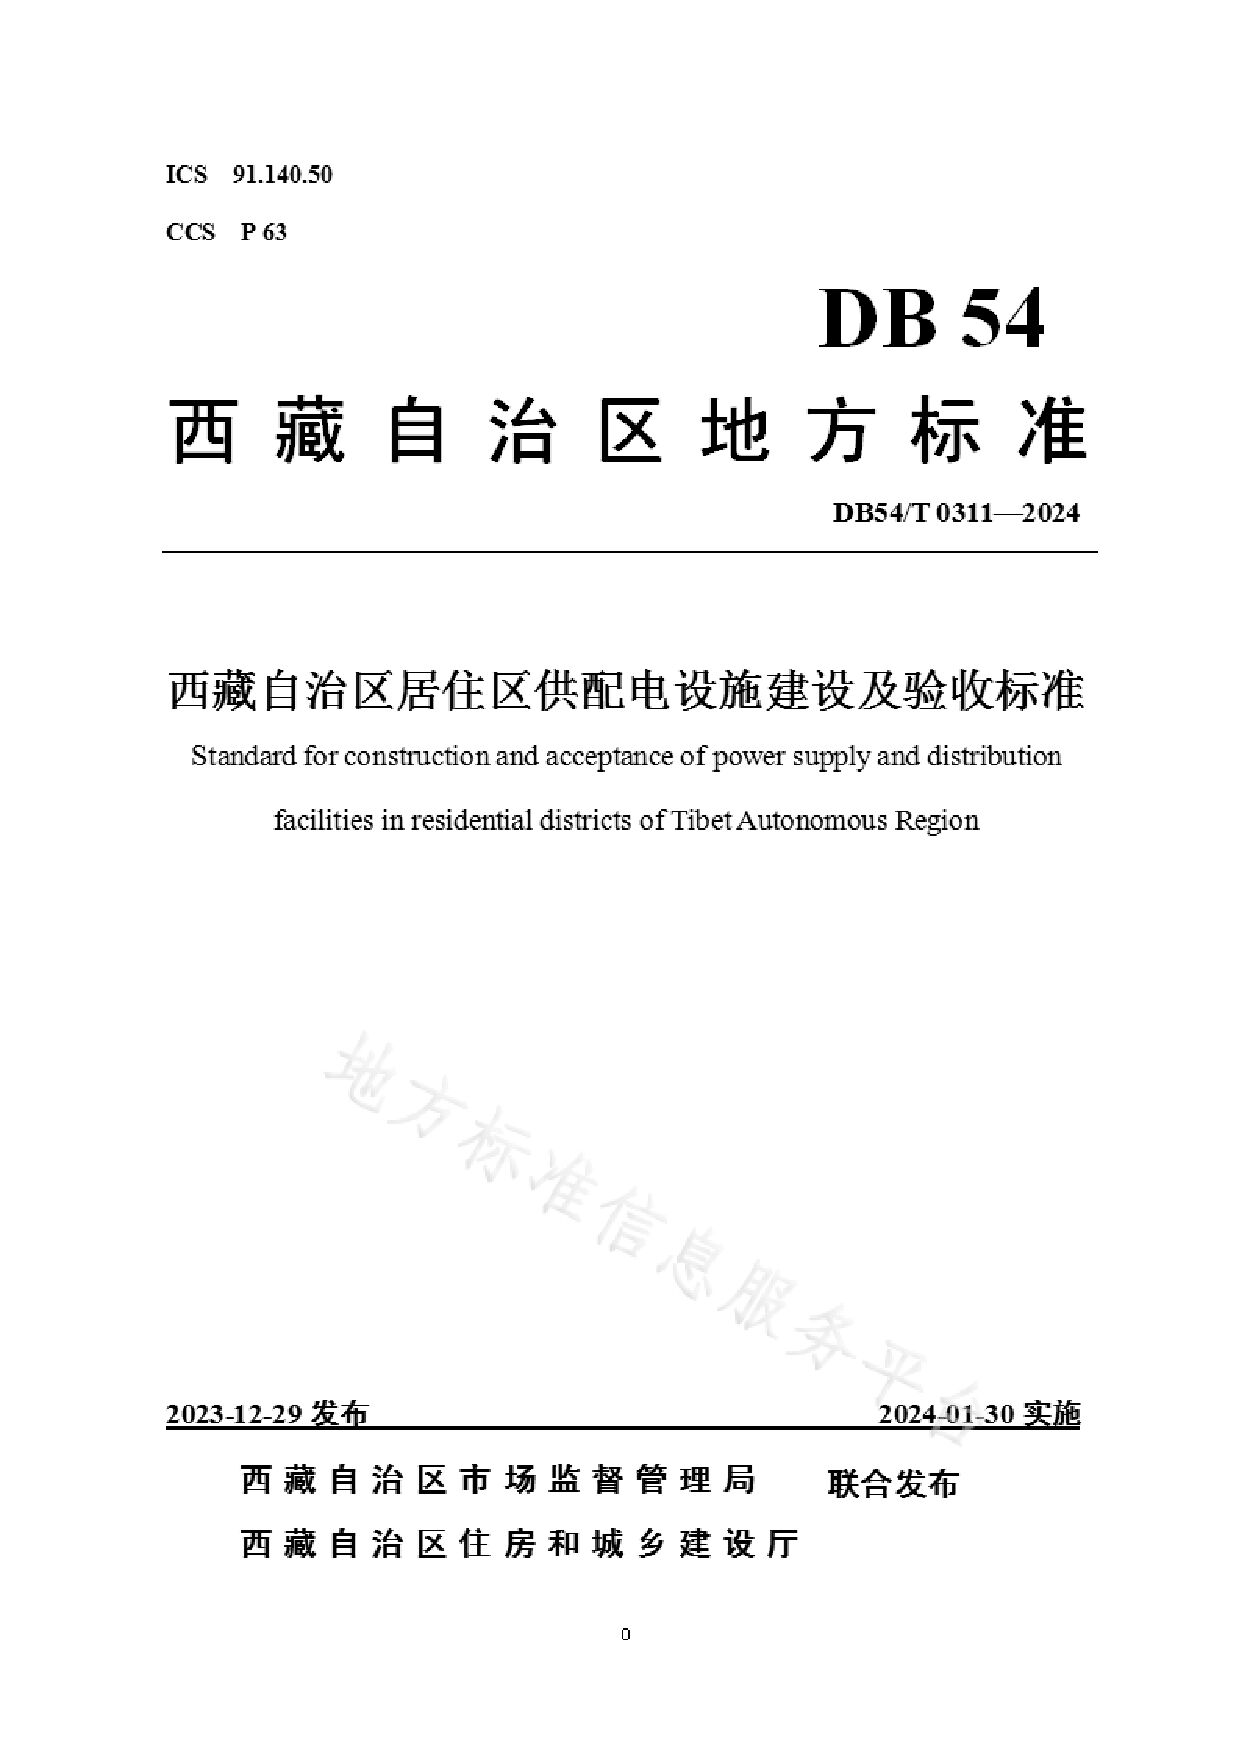 DB54/T 0311-2023